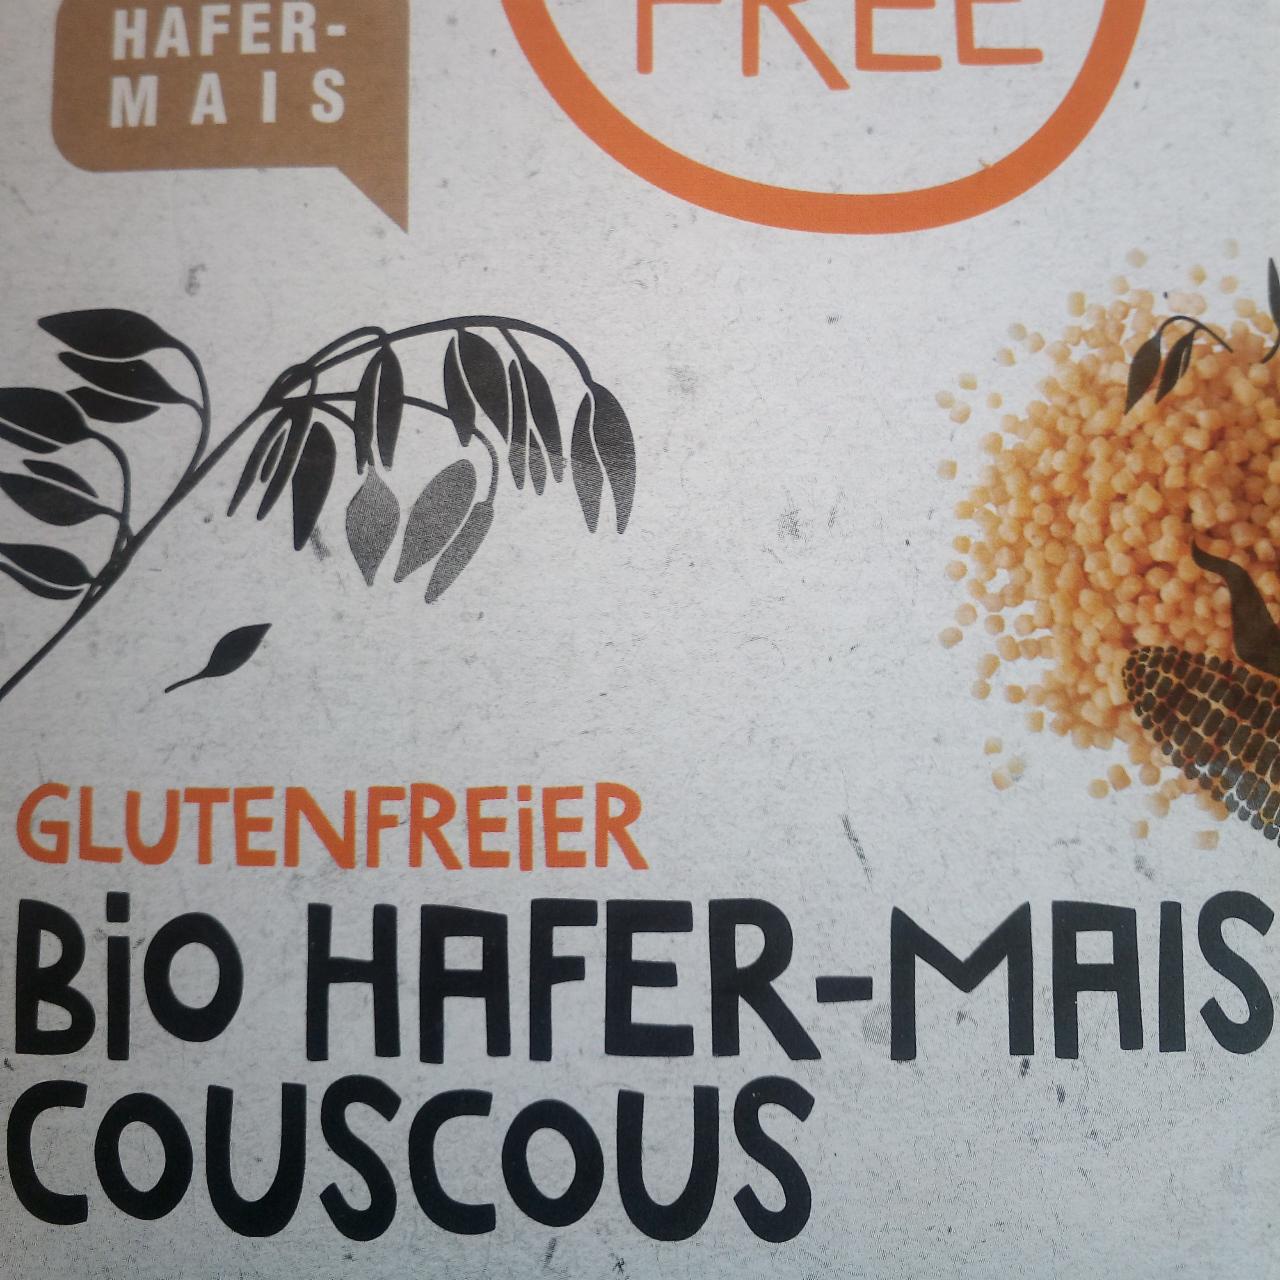 Fotografie - Glutenfreier Bio Hafer-mais Couscous Enjoy free